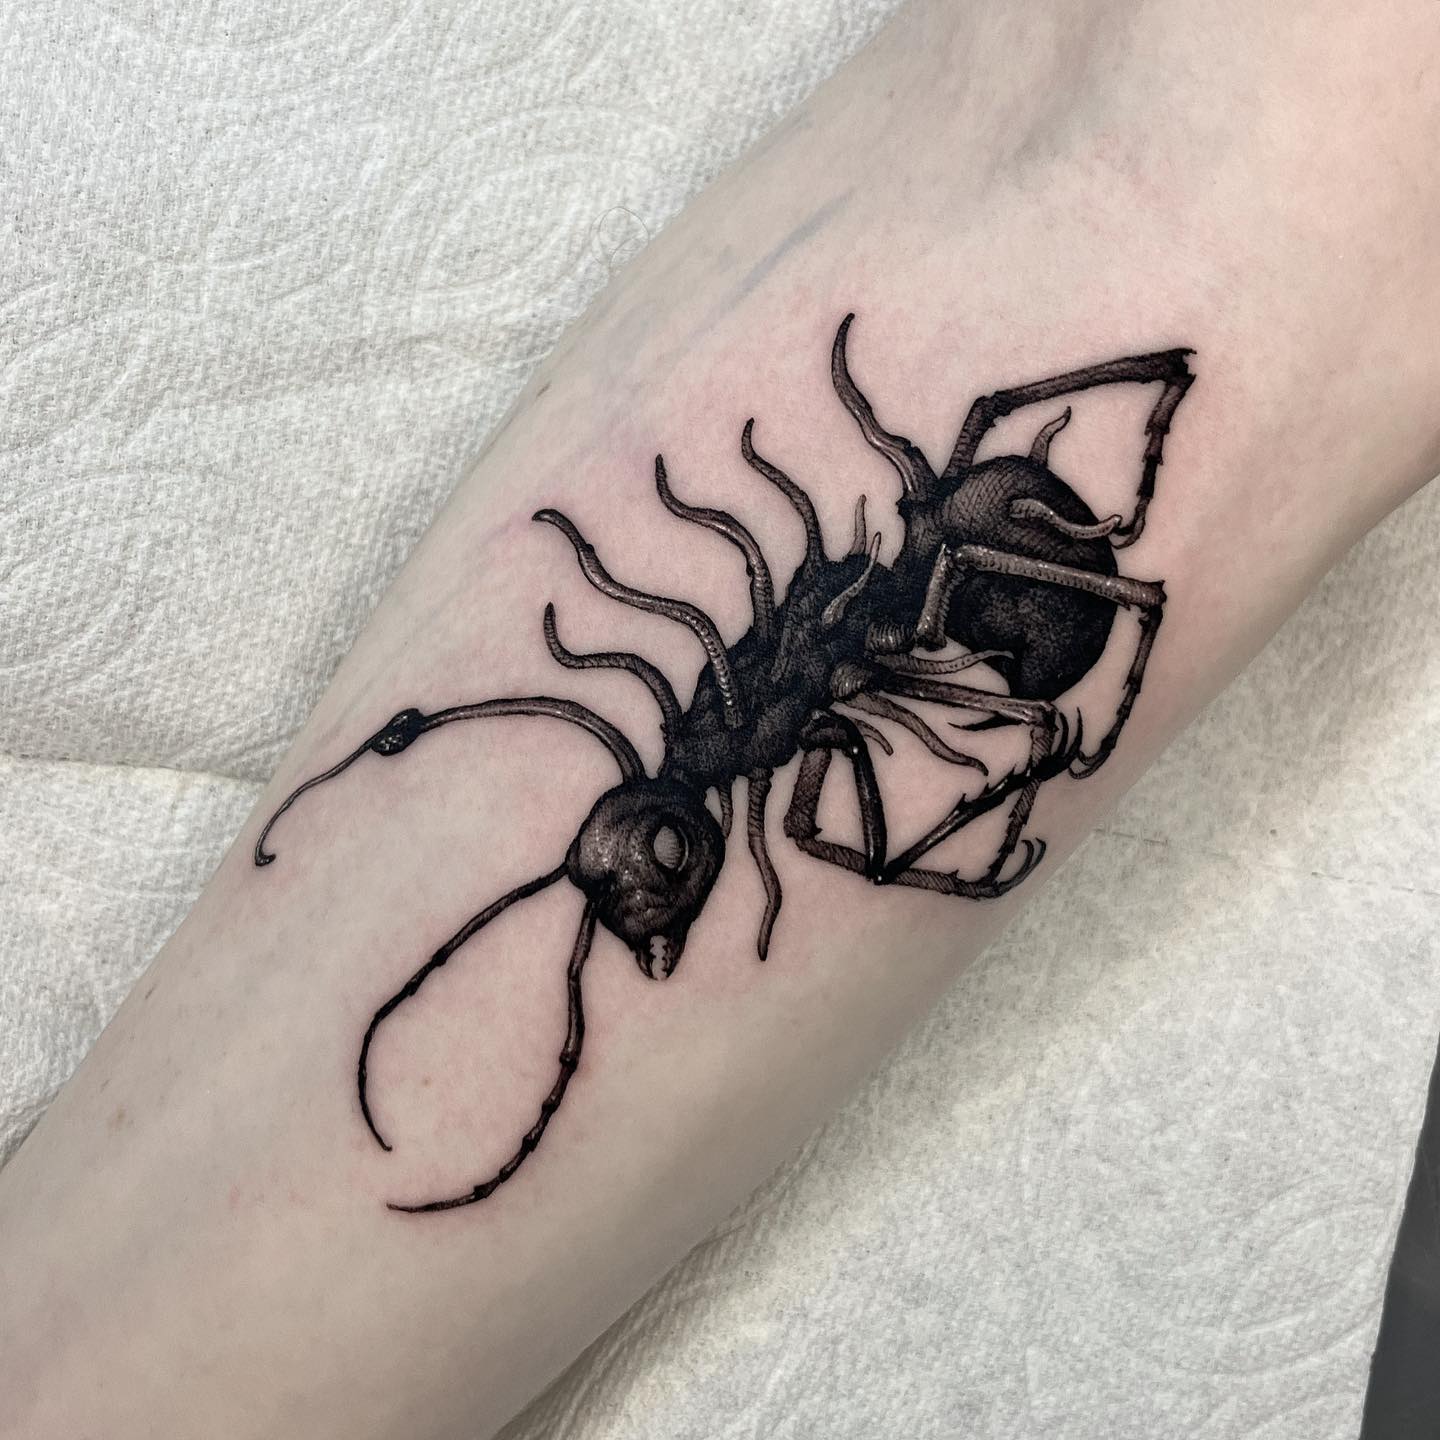 Ant tattoos by heukdo